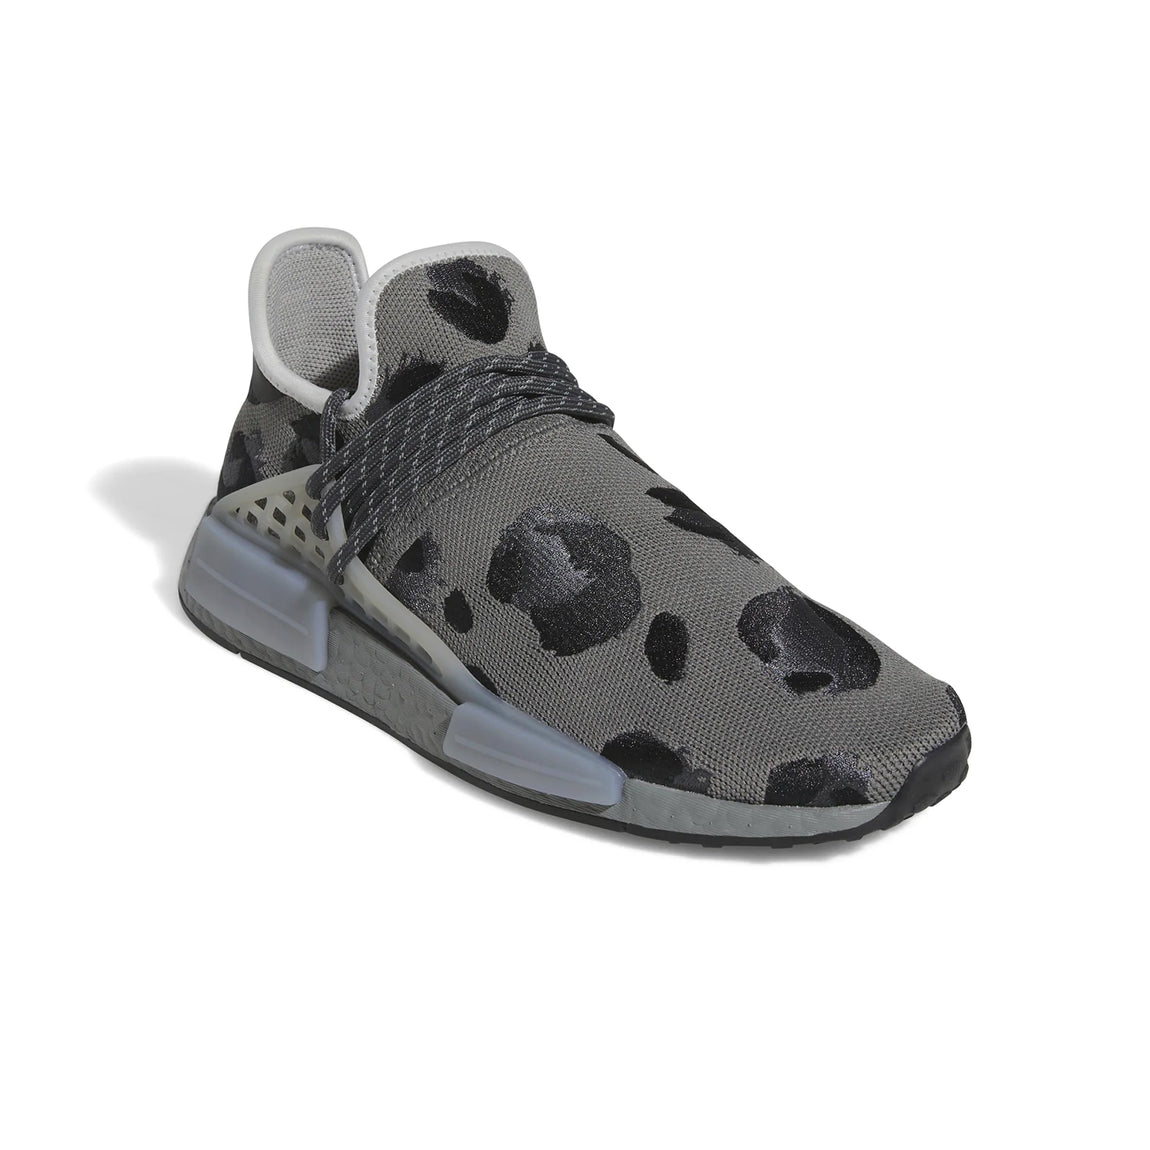 Adidas x Pharrell Williams Humanrace NMD Ash / Solid Grey / Core Black -  ID1531